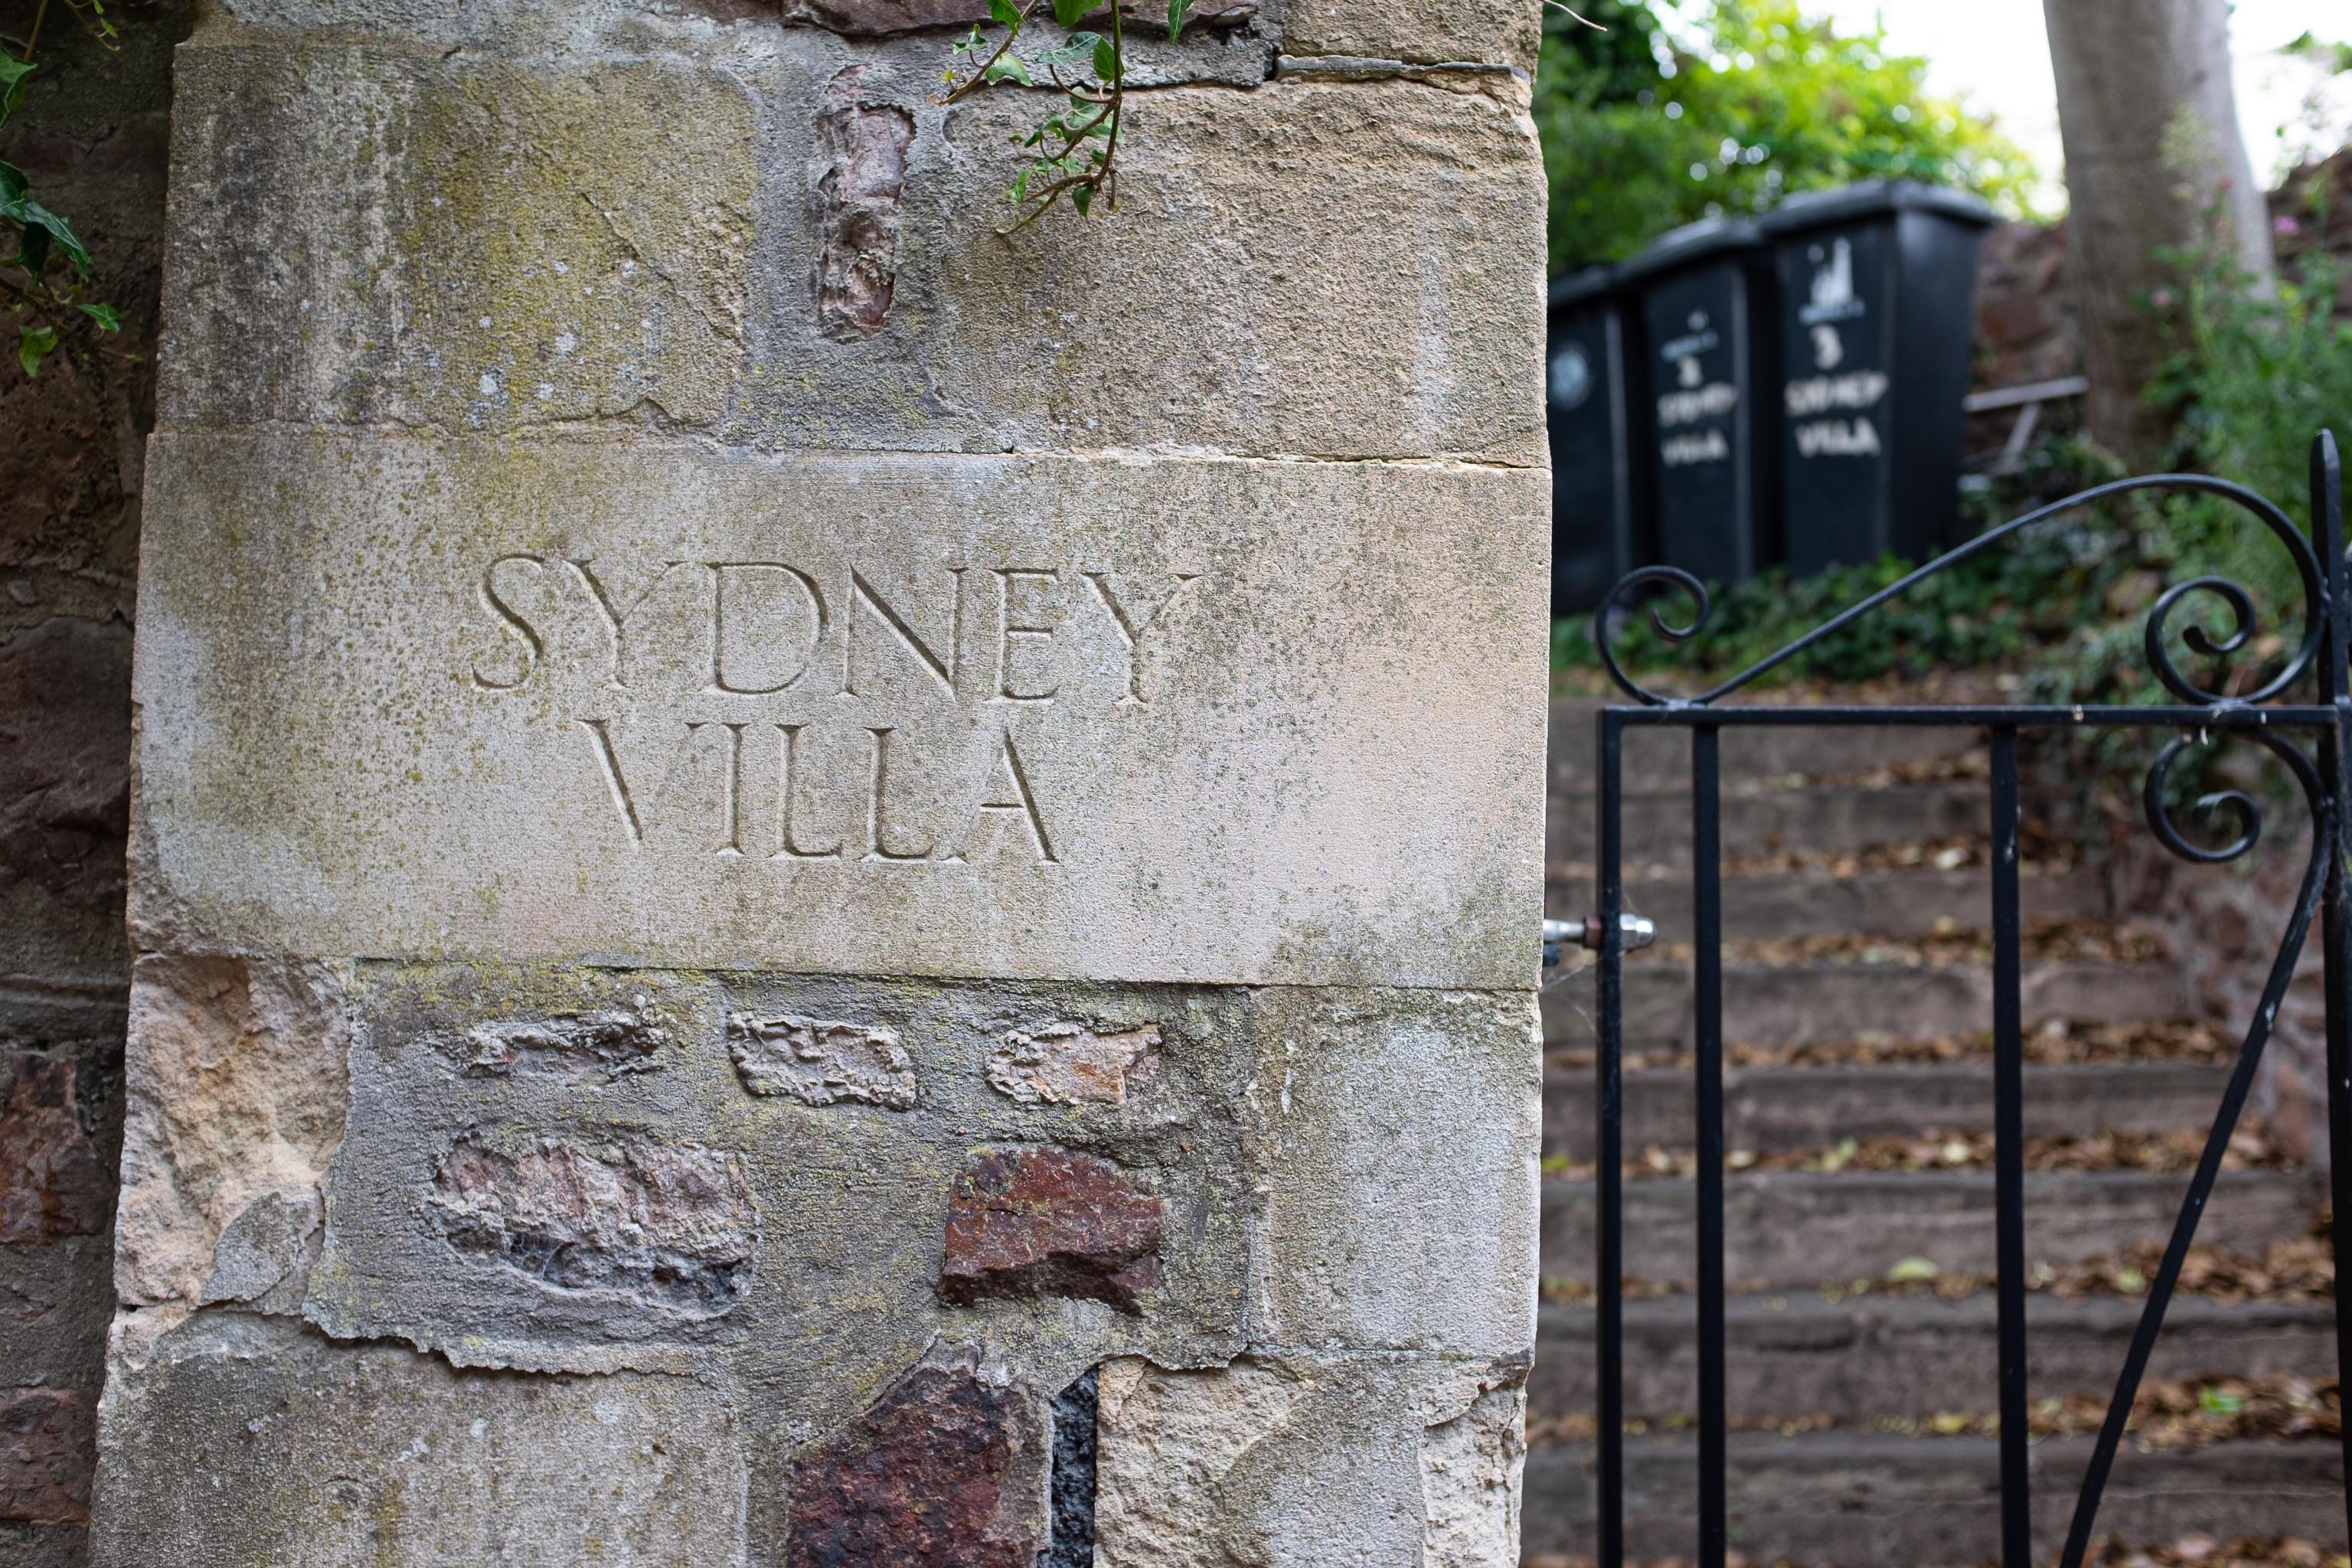 Sydney Villa
We've also seen Sydney Row, Upper Sydney Street and Sydney Garages on previous wanders.
